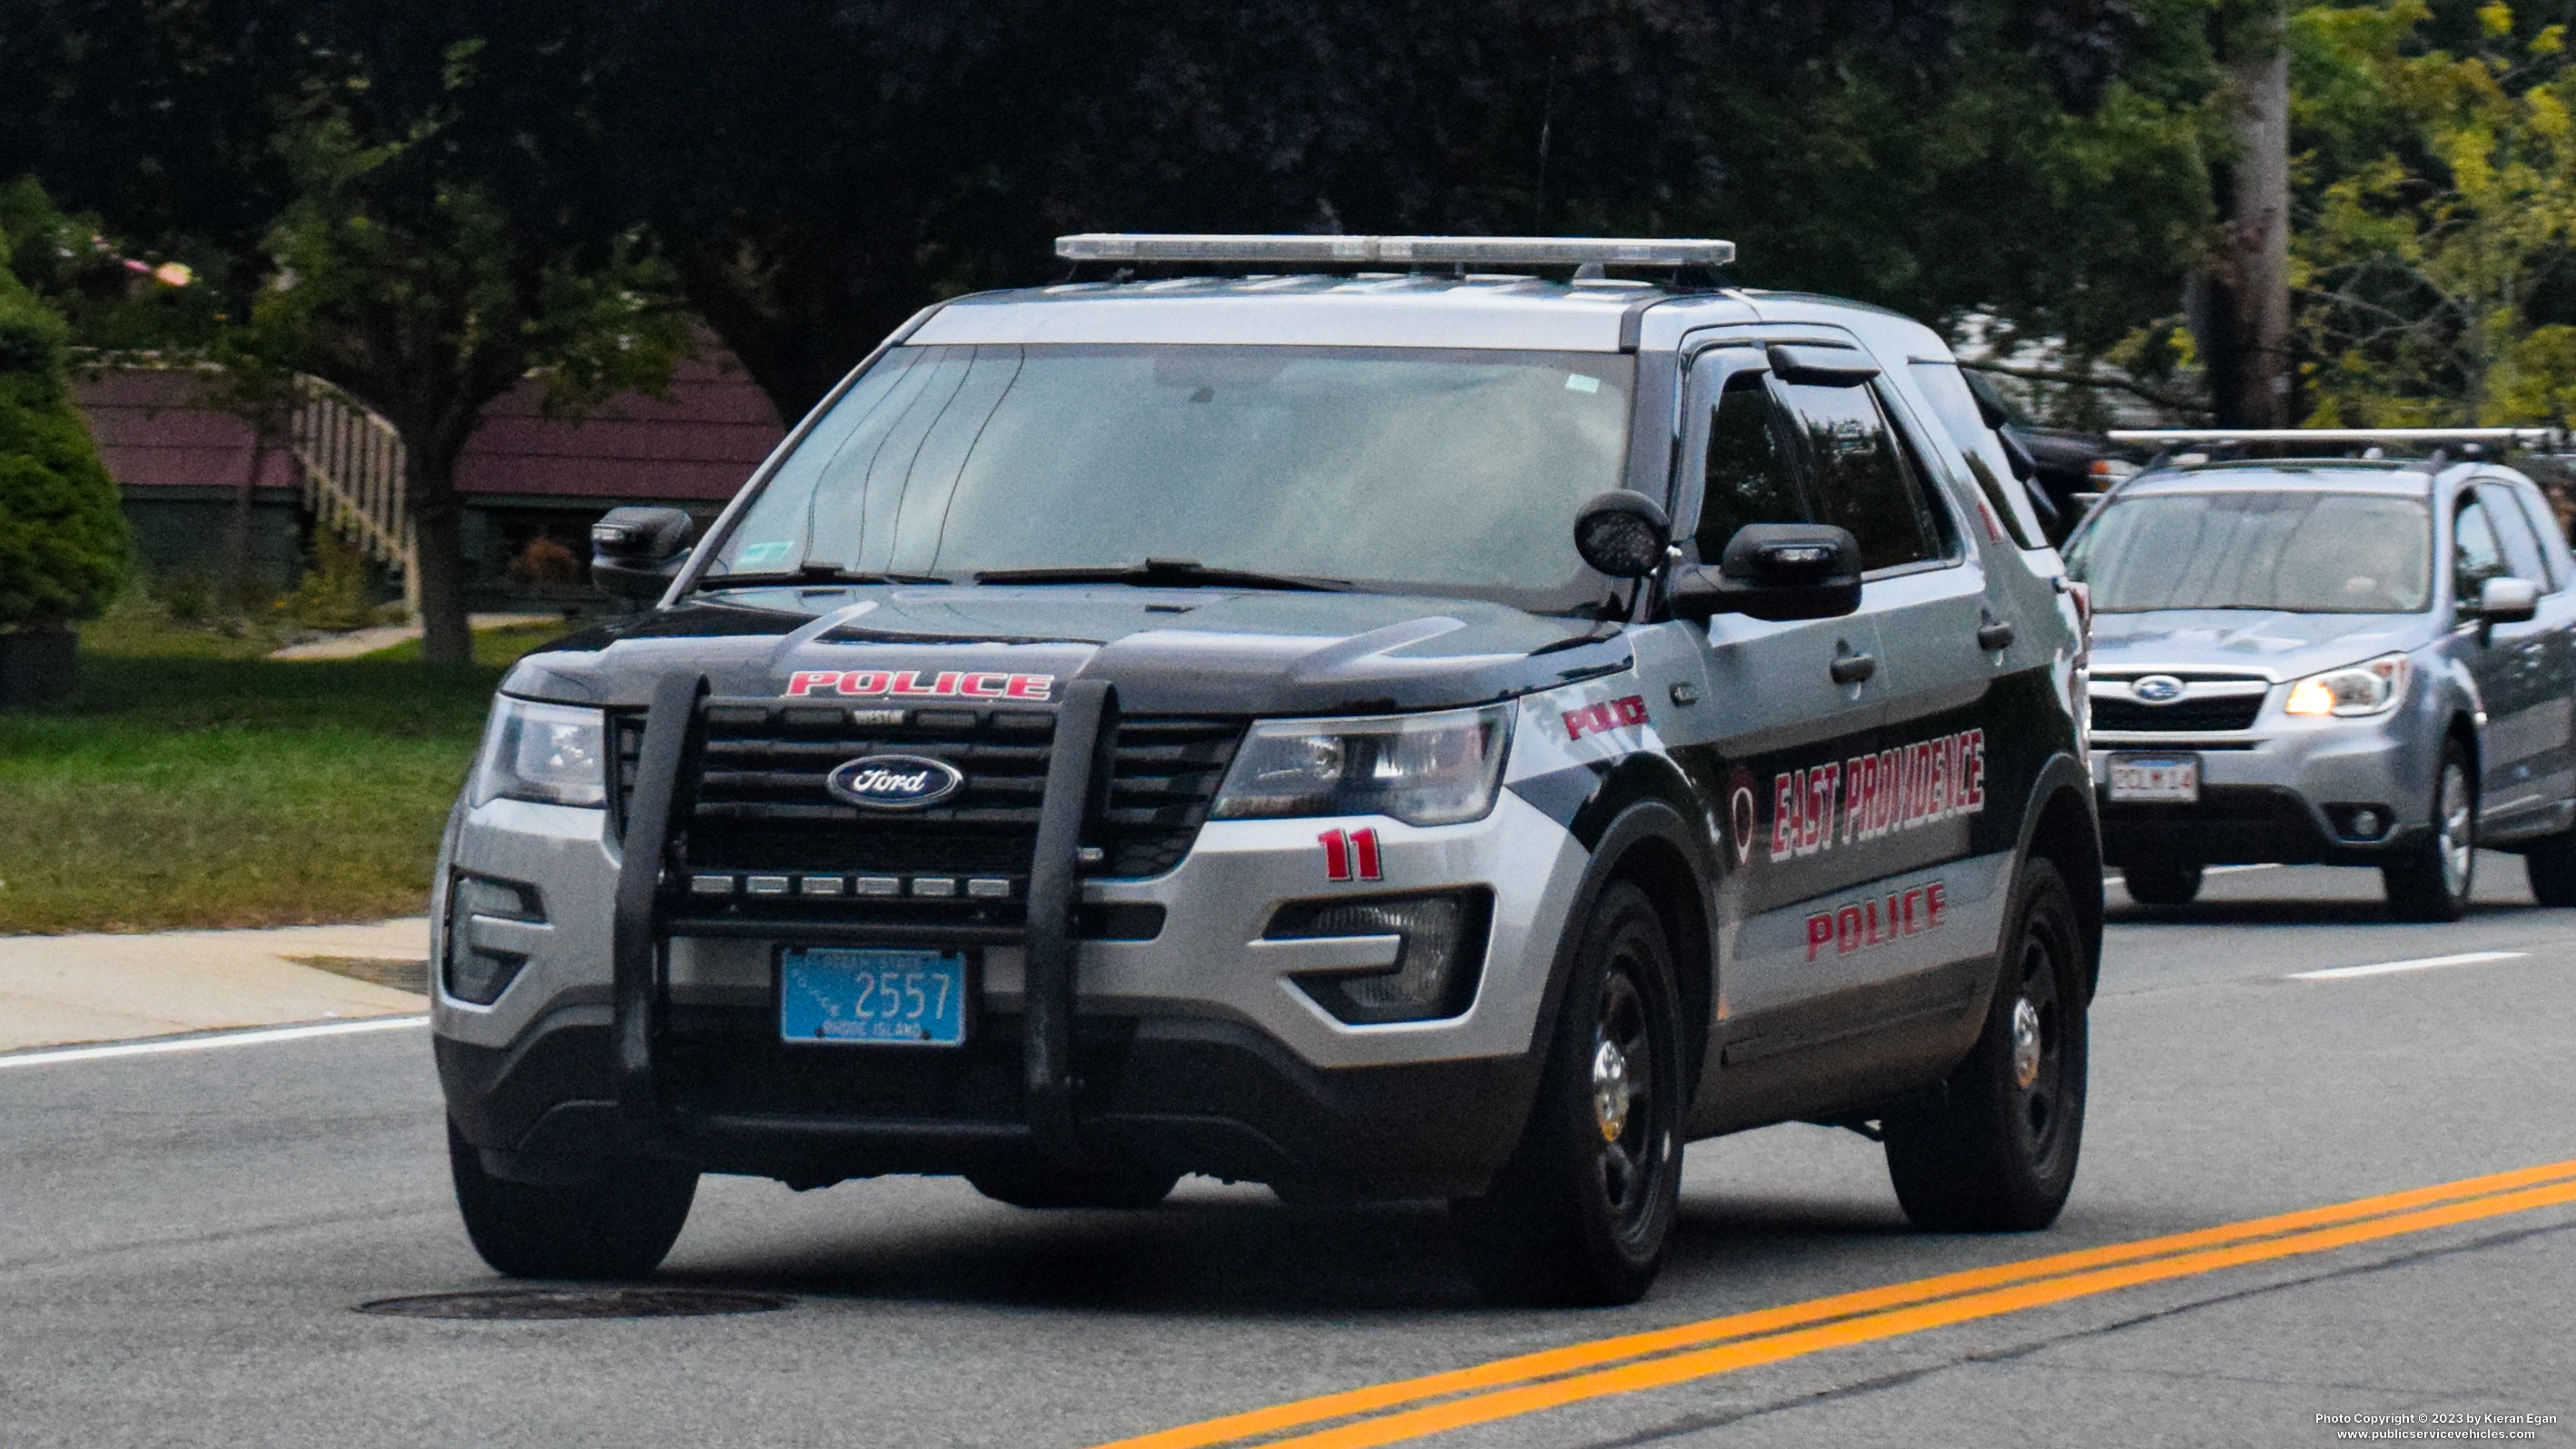 A photo  of East Providence Police
            Car 11, a 2018 Ford Police Interceptor Utility             taken by Kieran Egan